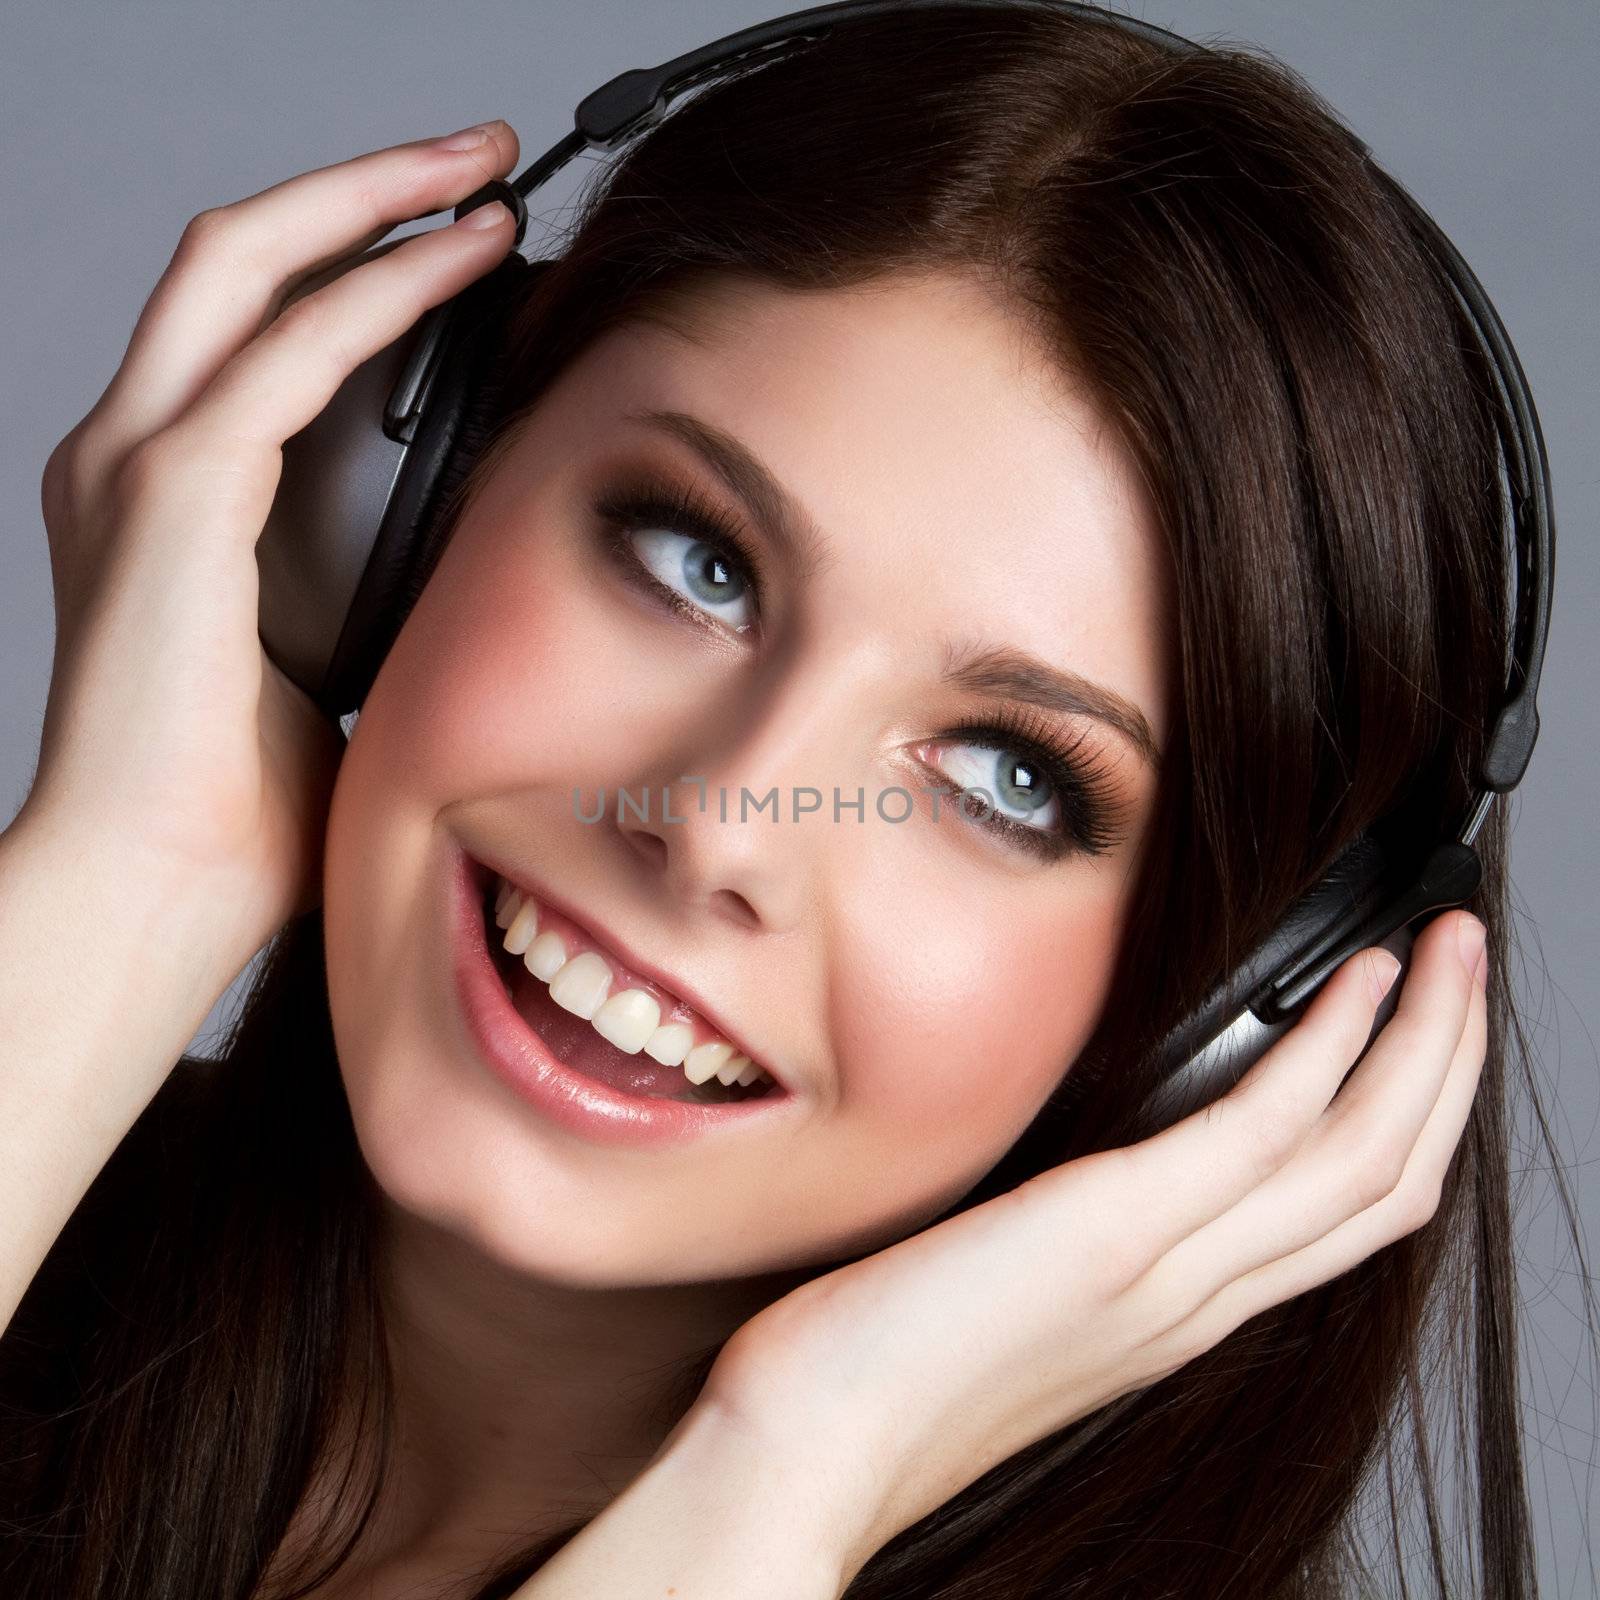 Girl listening to headphones music